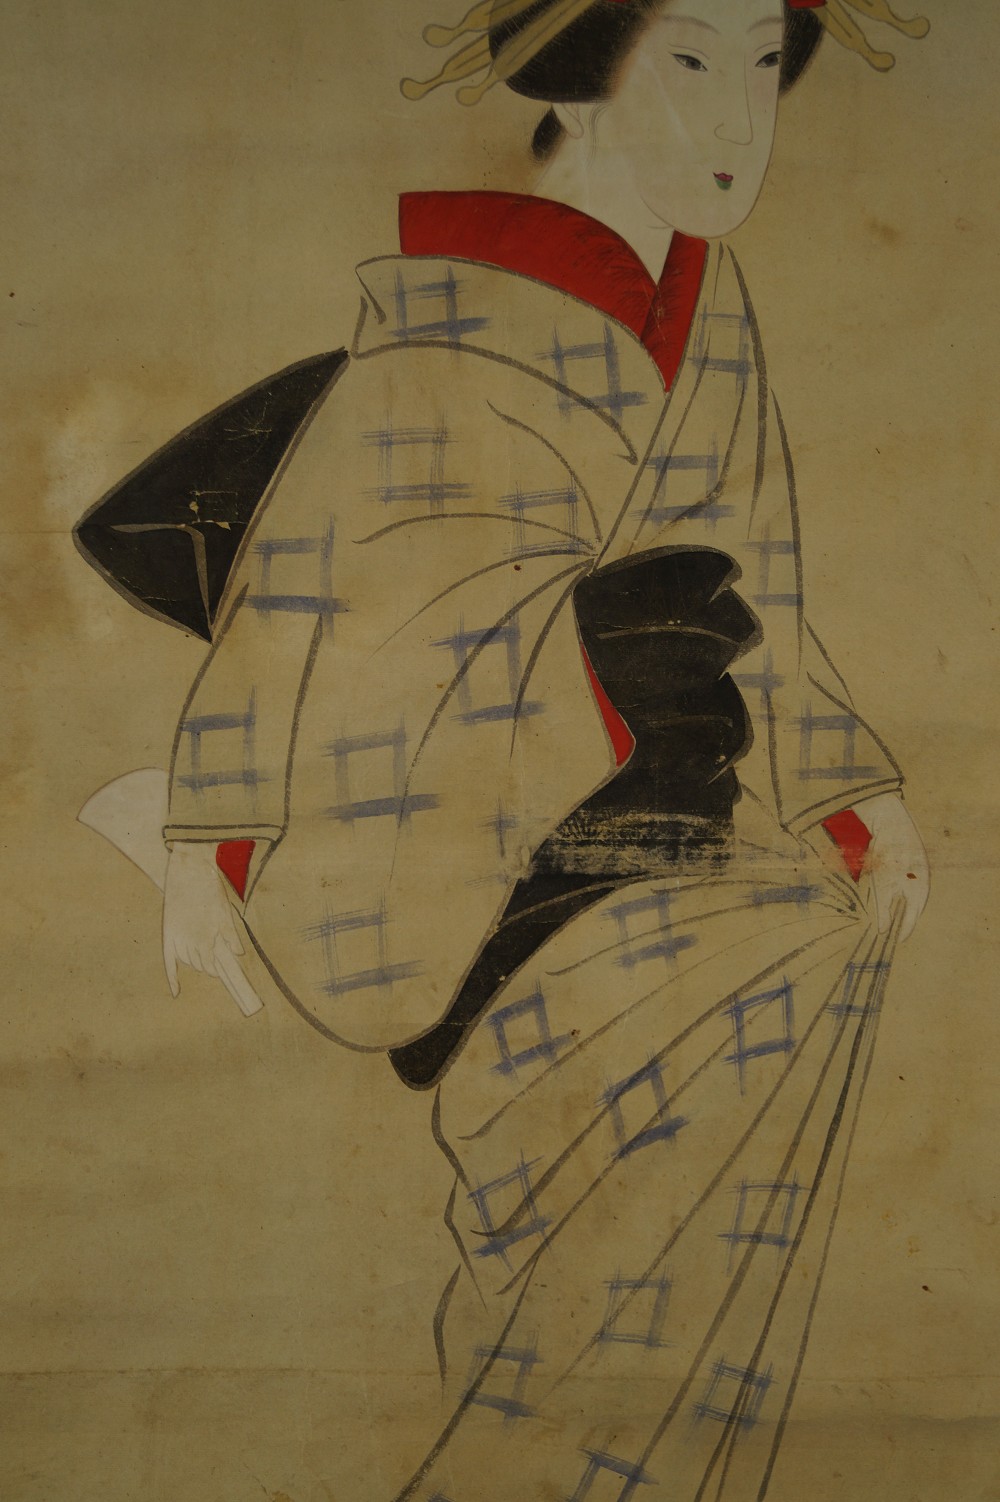 Schönheit im Kimono - Japanisches Rollbild (Kakejiku, Kakemono)